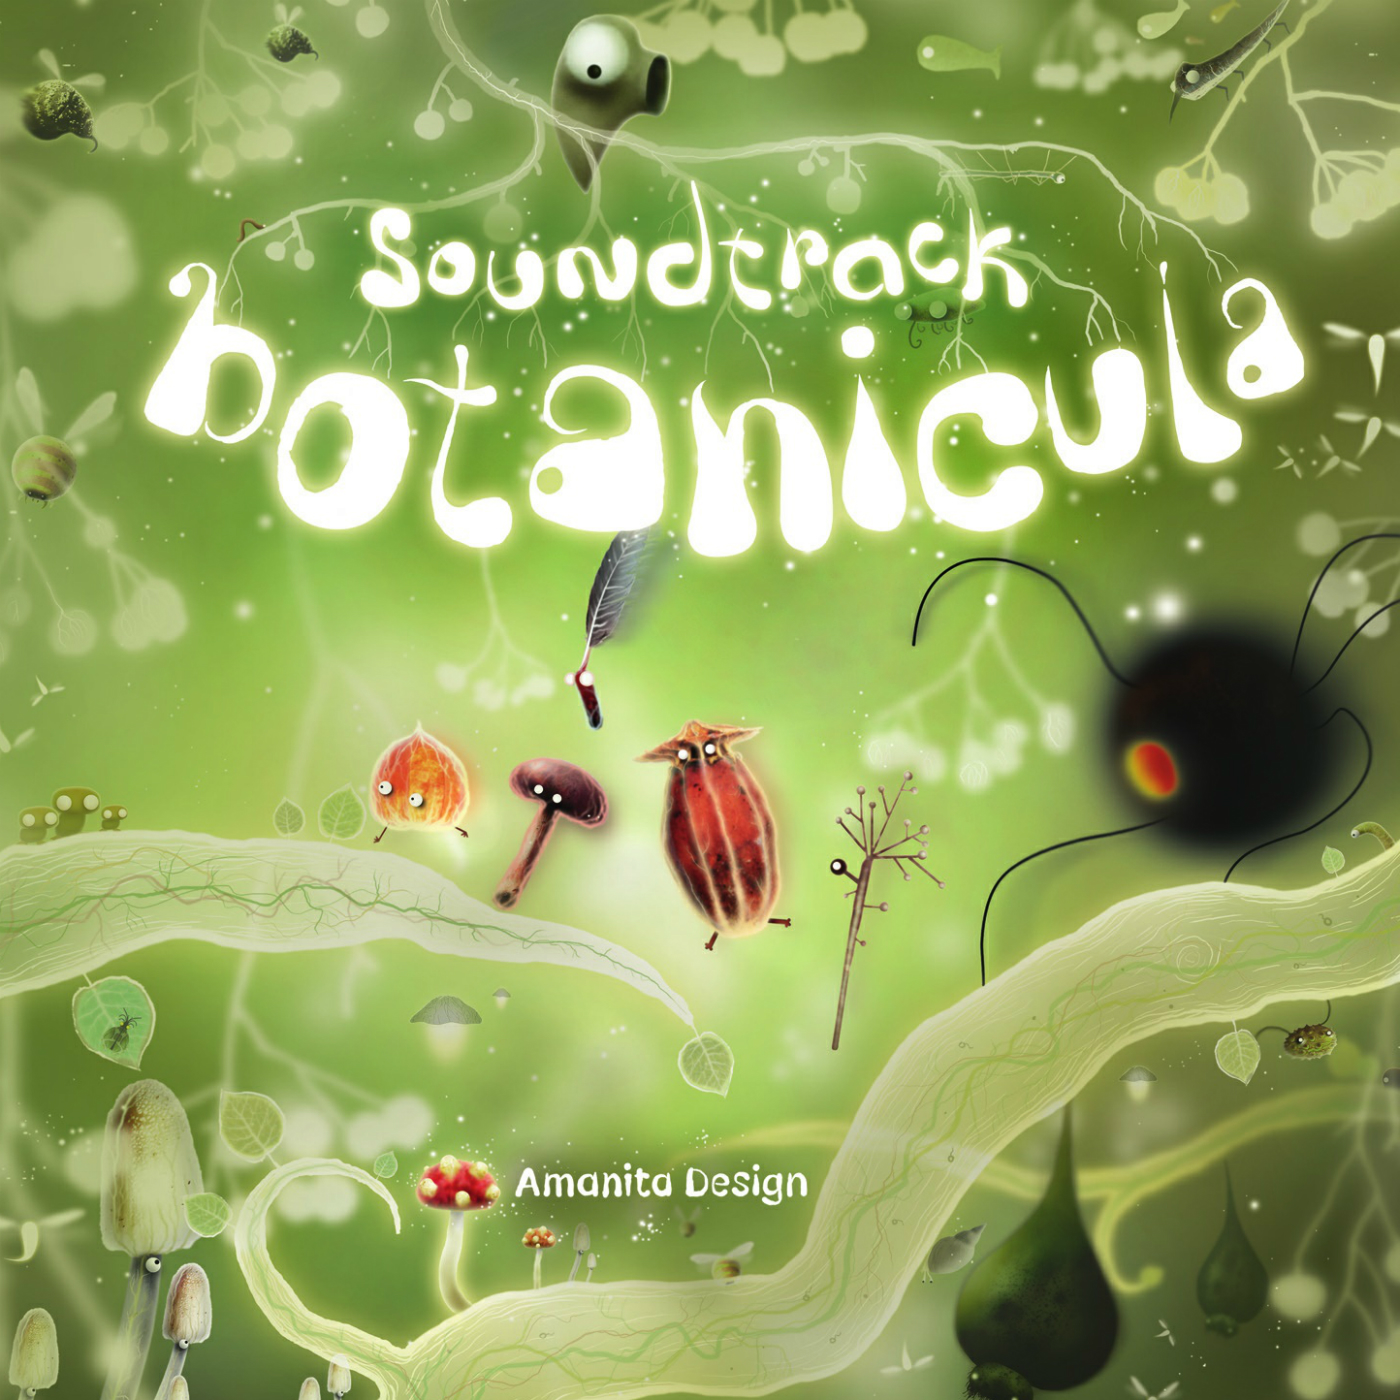 Botanicula-Soundtrack_cover__1400x1400.jpg